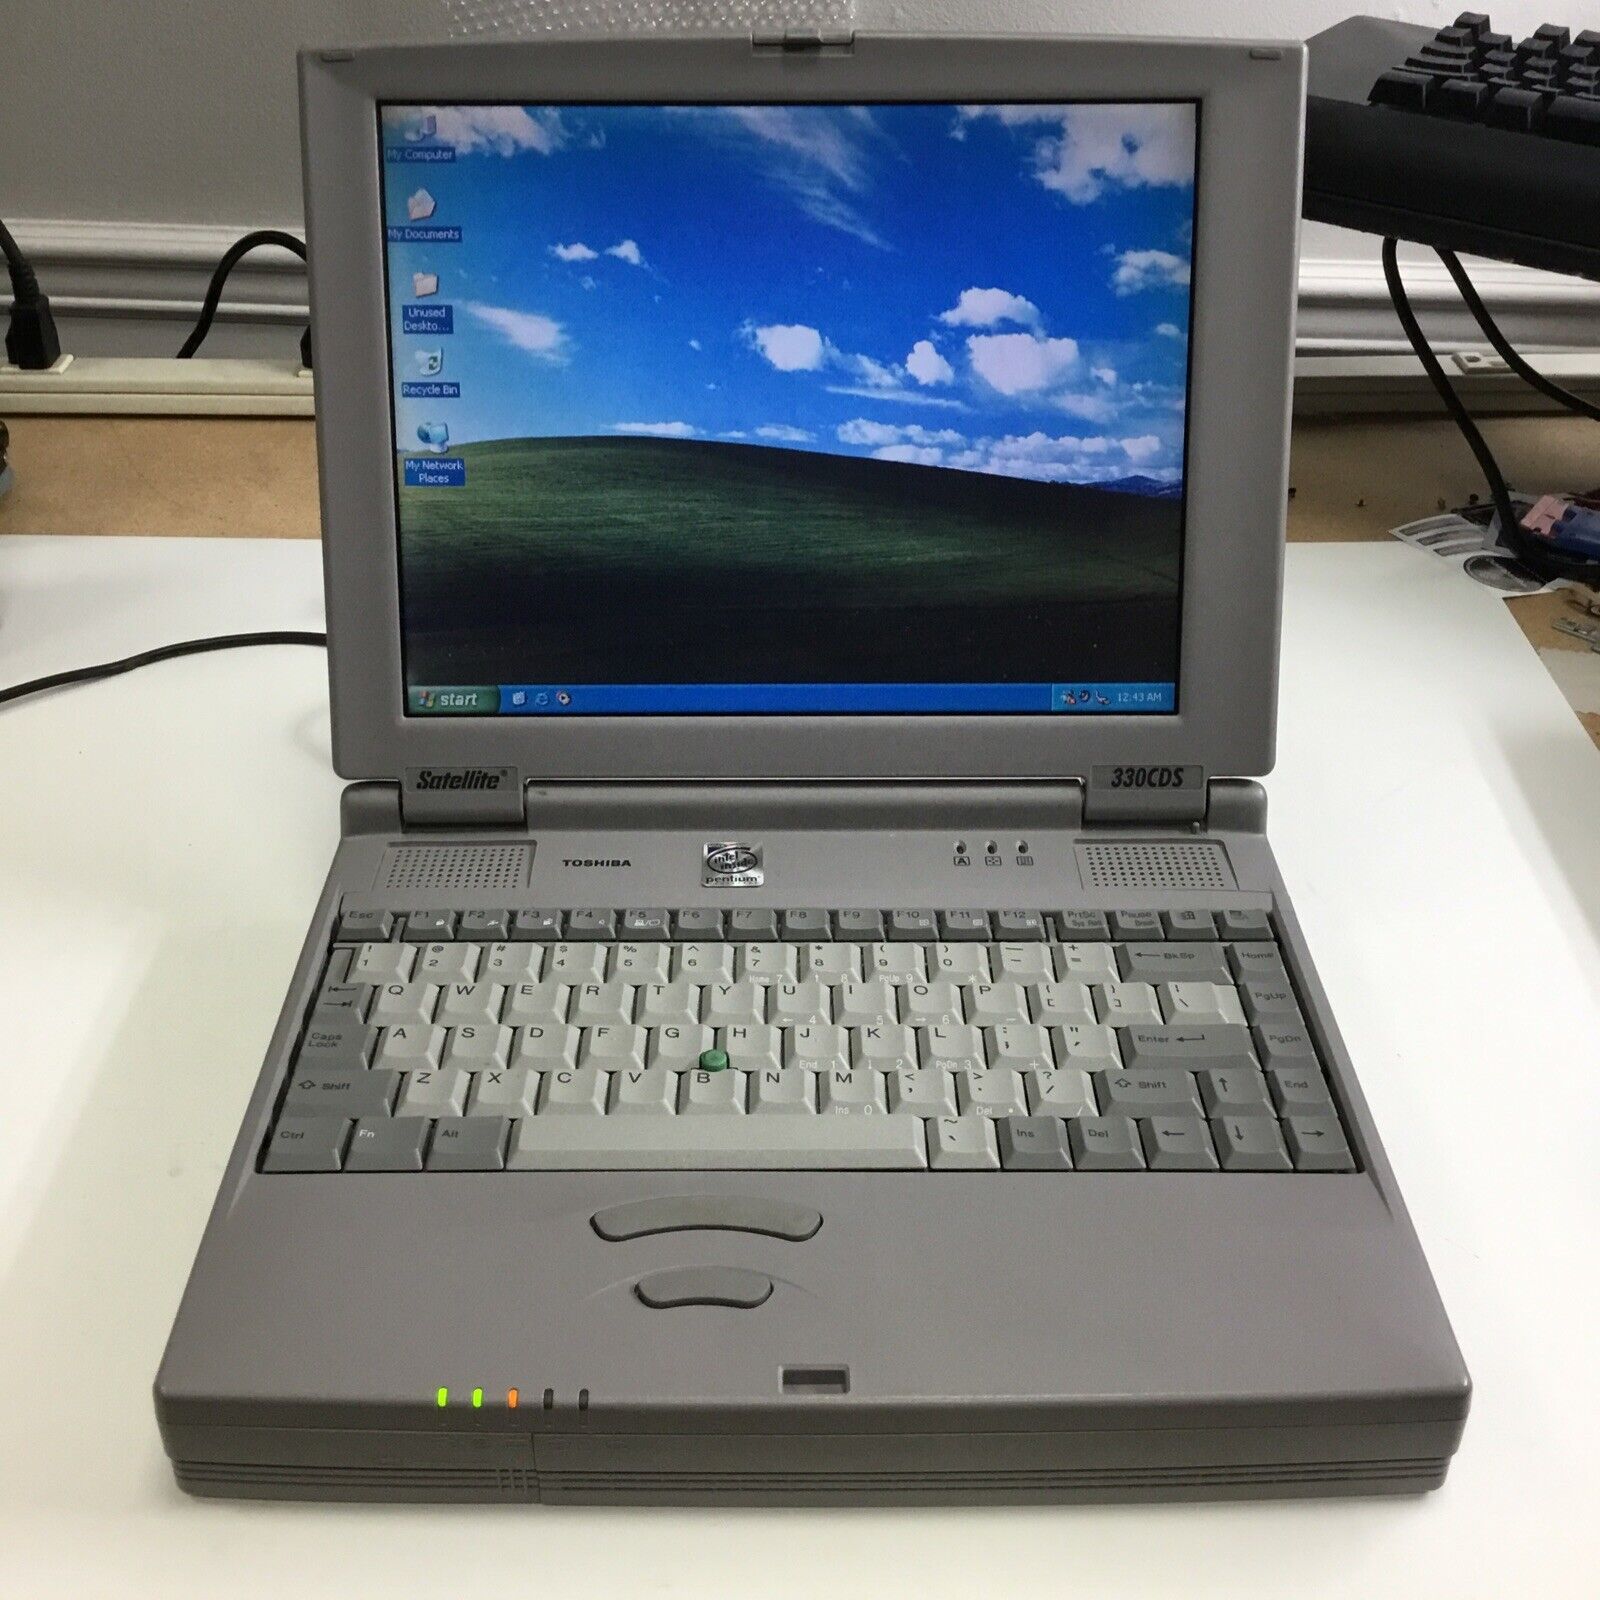 Toshiba Satellite 330CDS Laptop Intel Pentium @ 266 MHz  BOOTS, SEE DETAILS